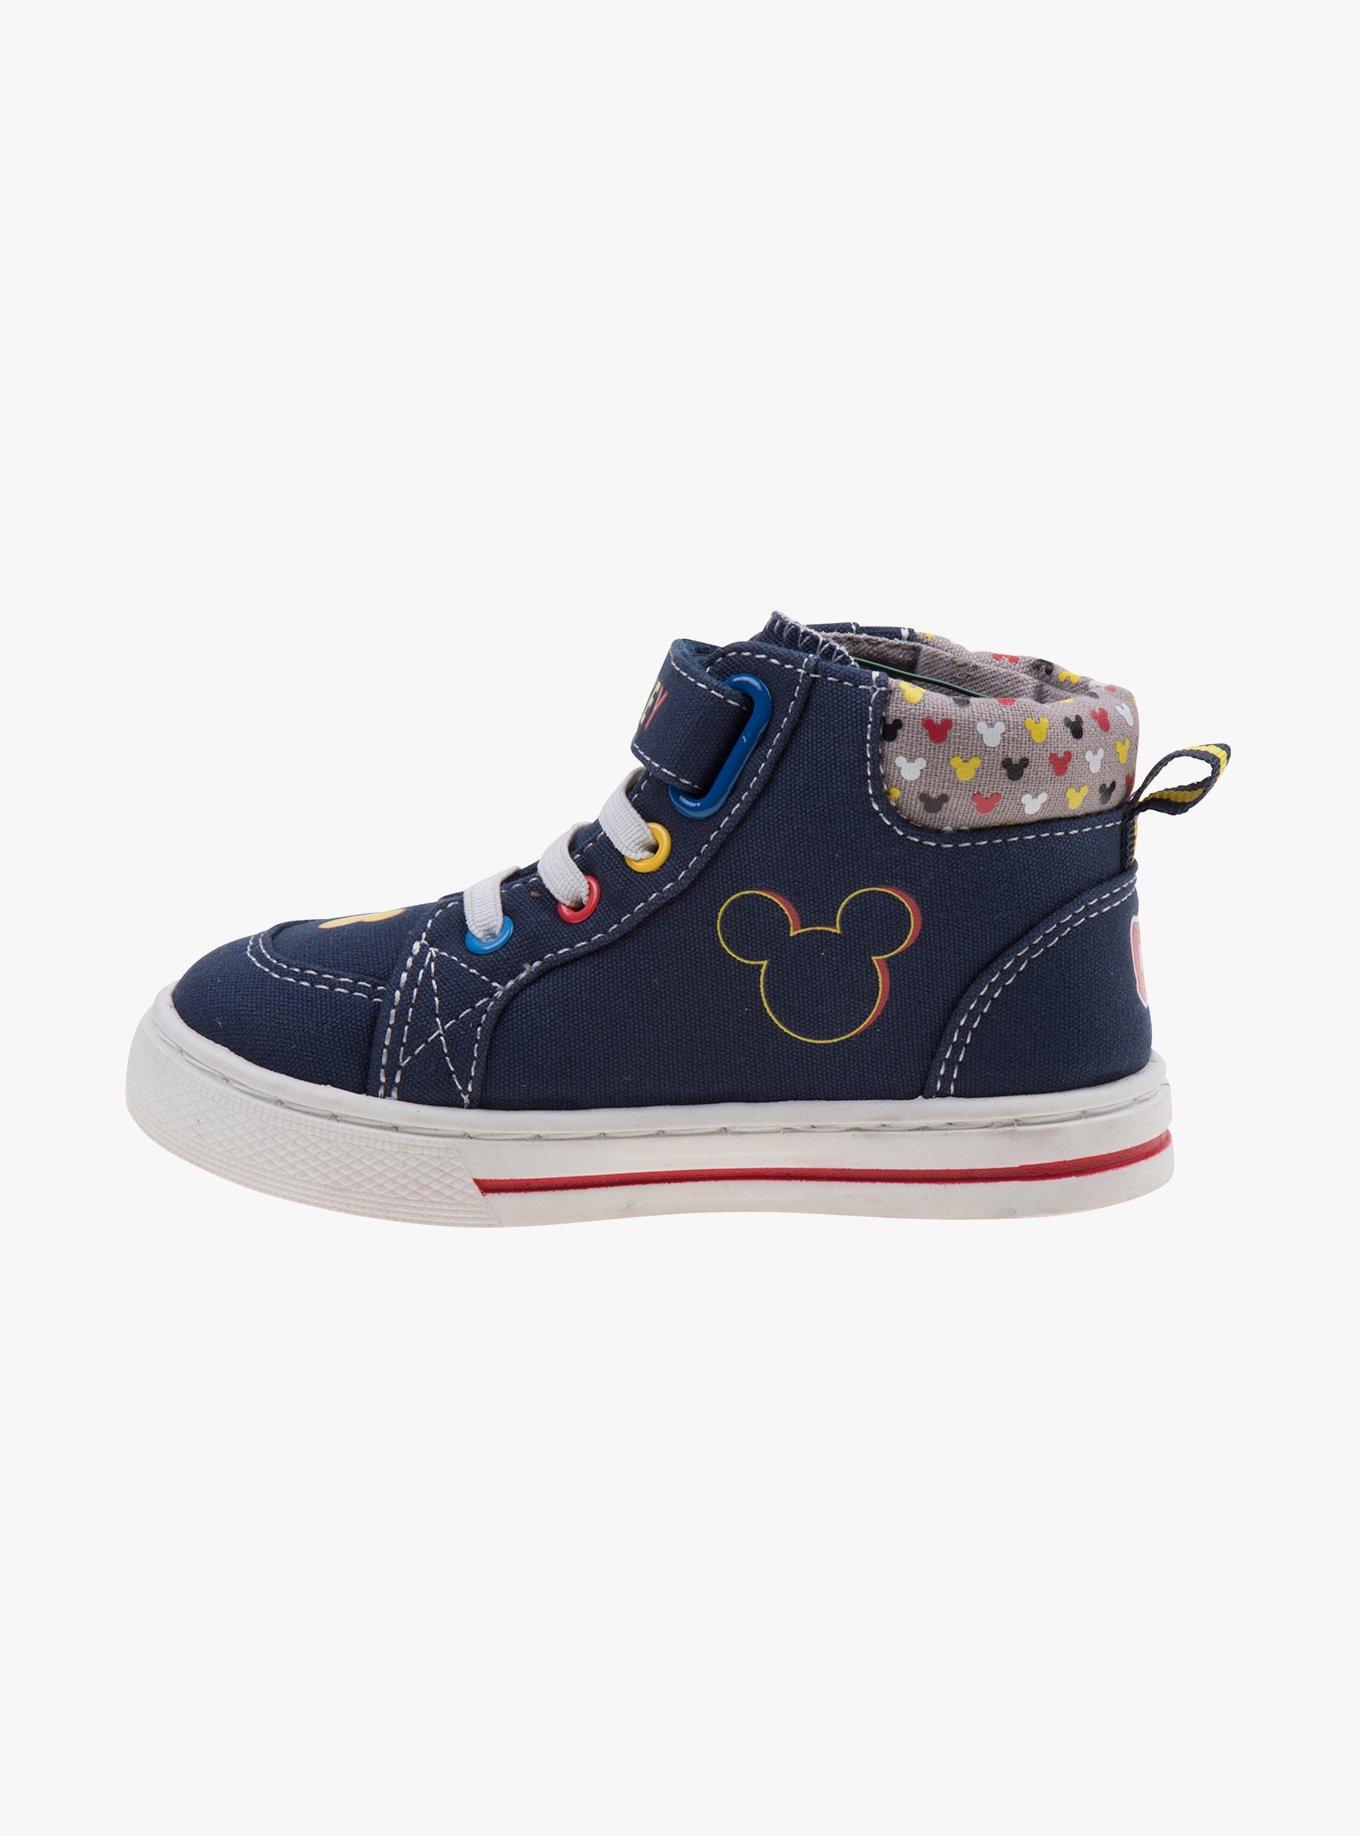 Disney Mickey Mouse Hi-Top Toddler Sneakers, BLUE  NAVY, alternate